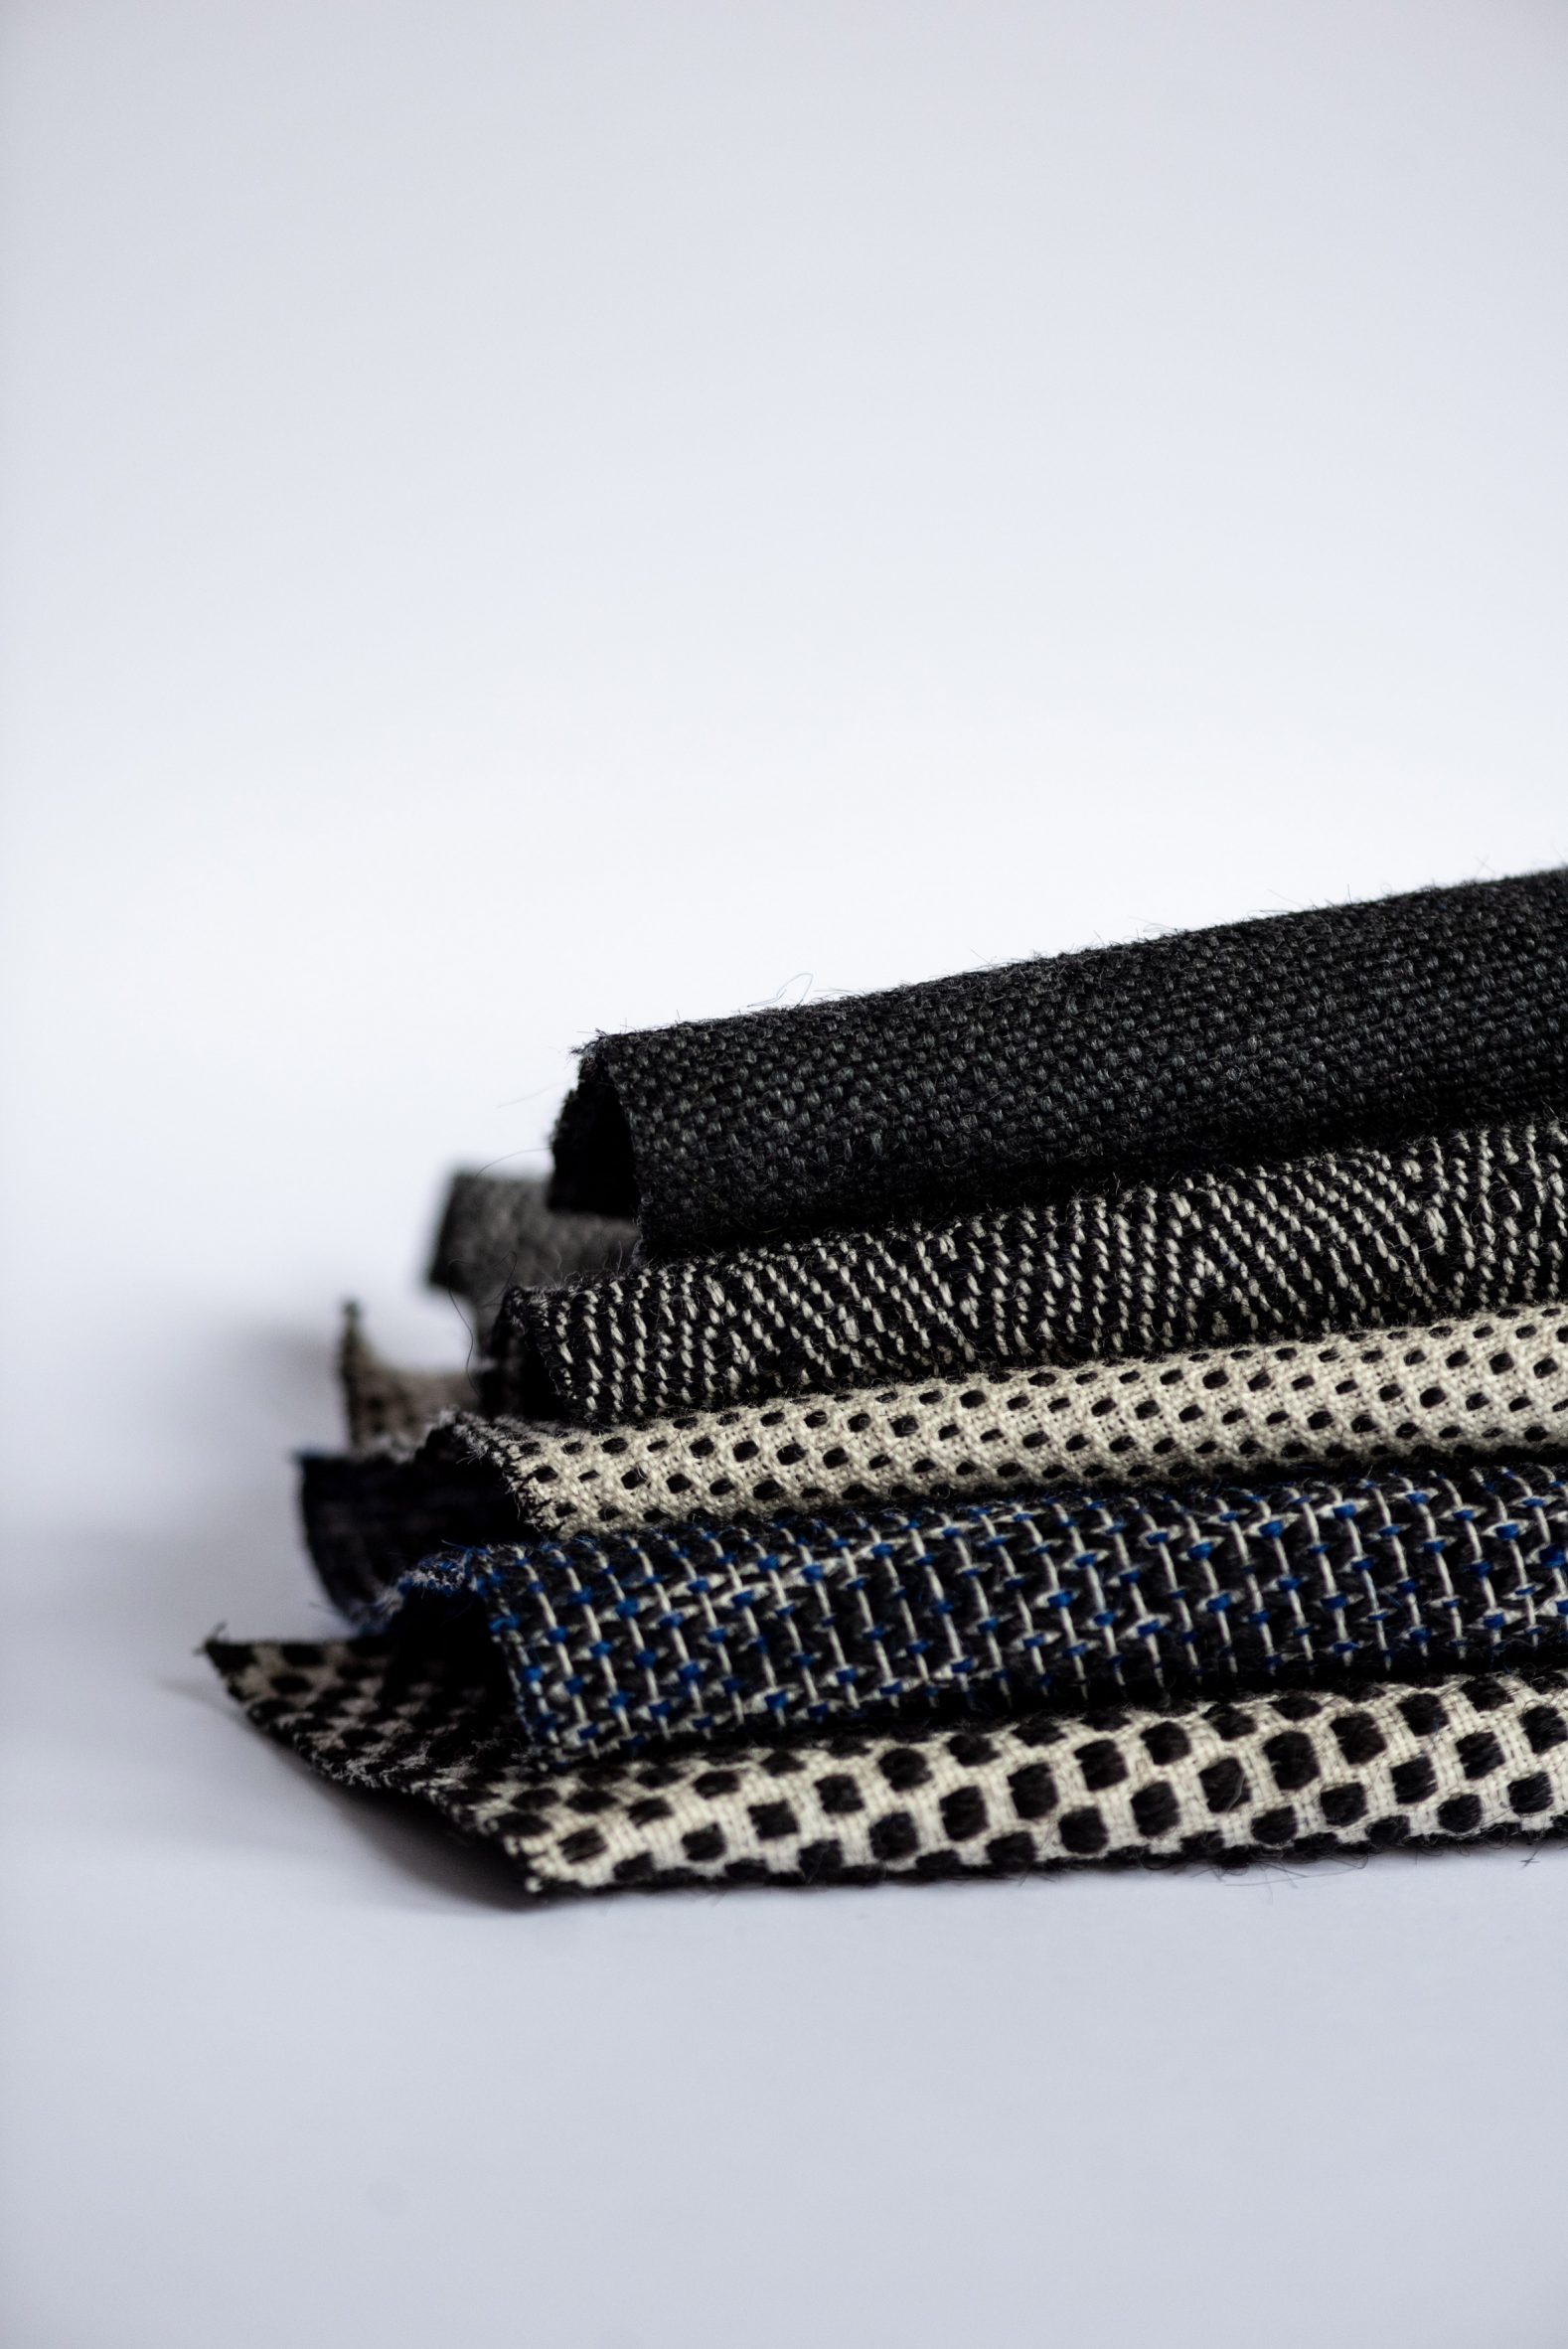 oneOone Cotton Flex Black Fabric Herringbone Pattern Diy Clothing